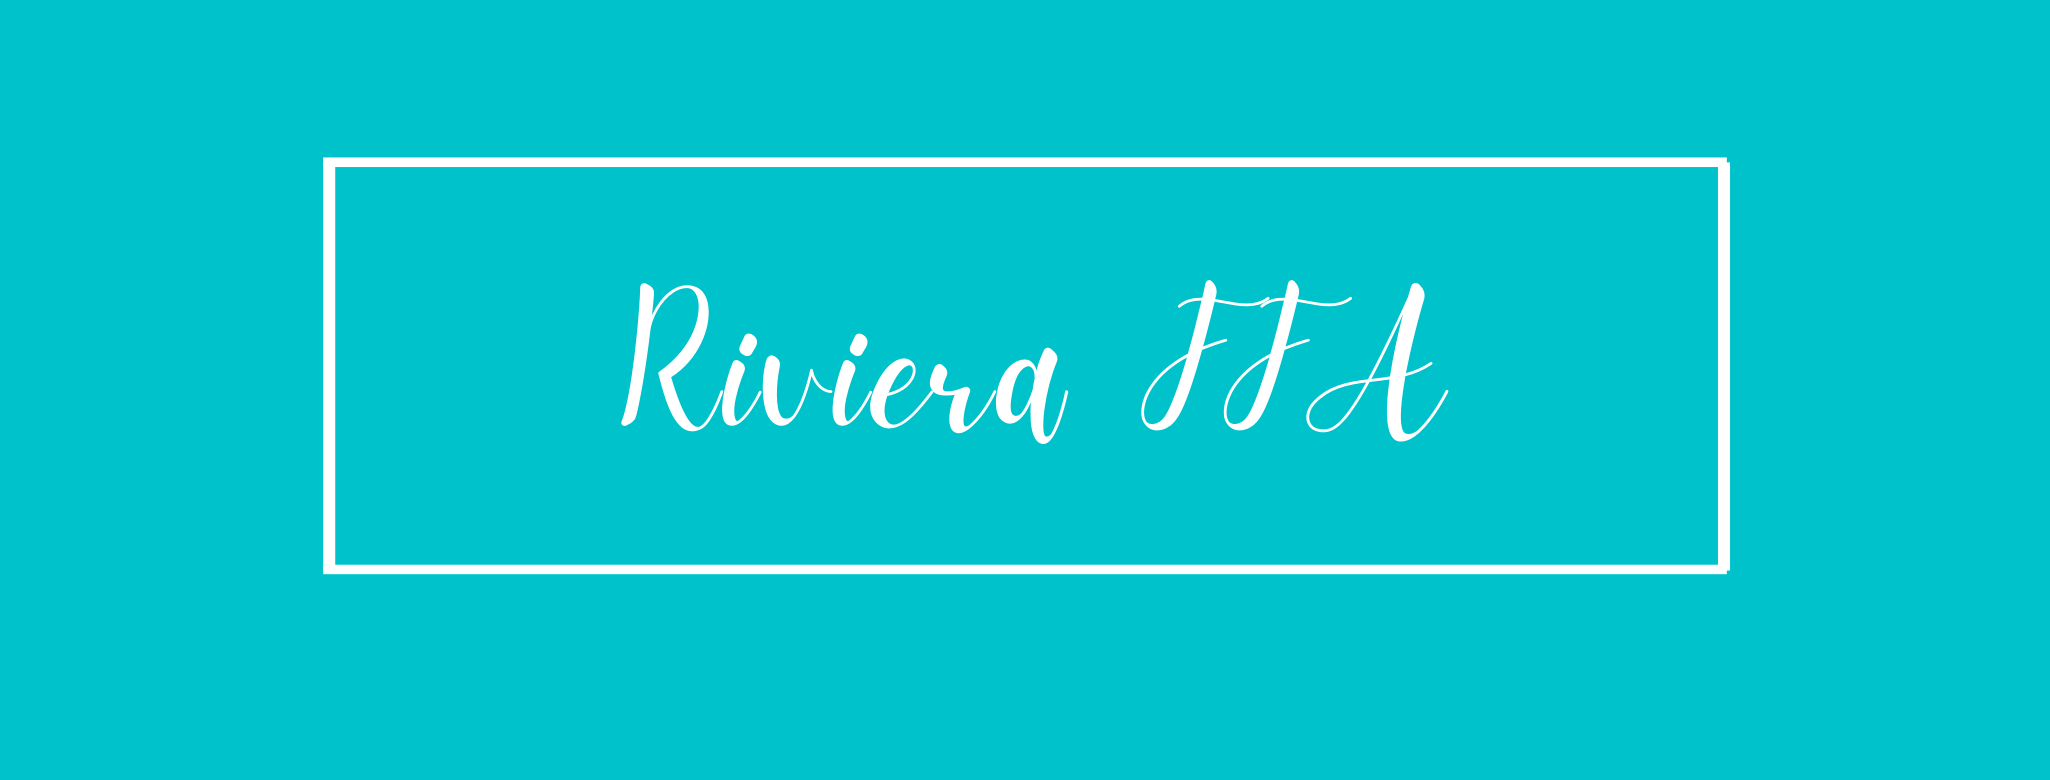 Riviera FFA Hyperlink.png